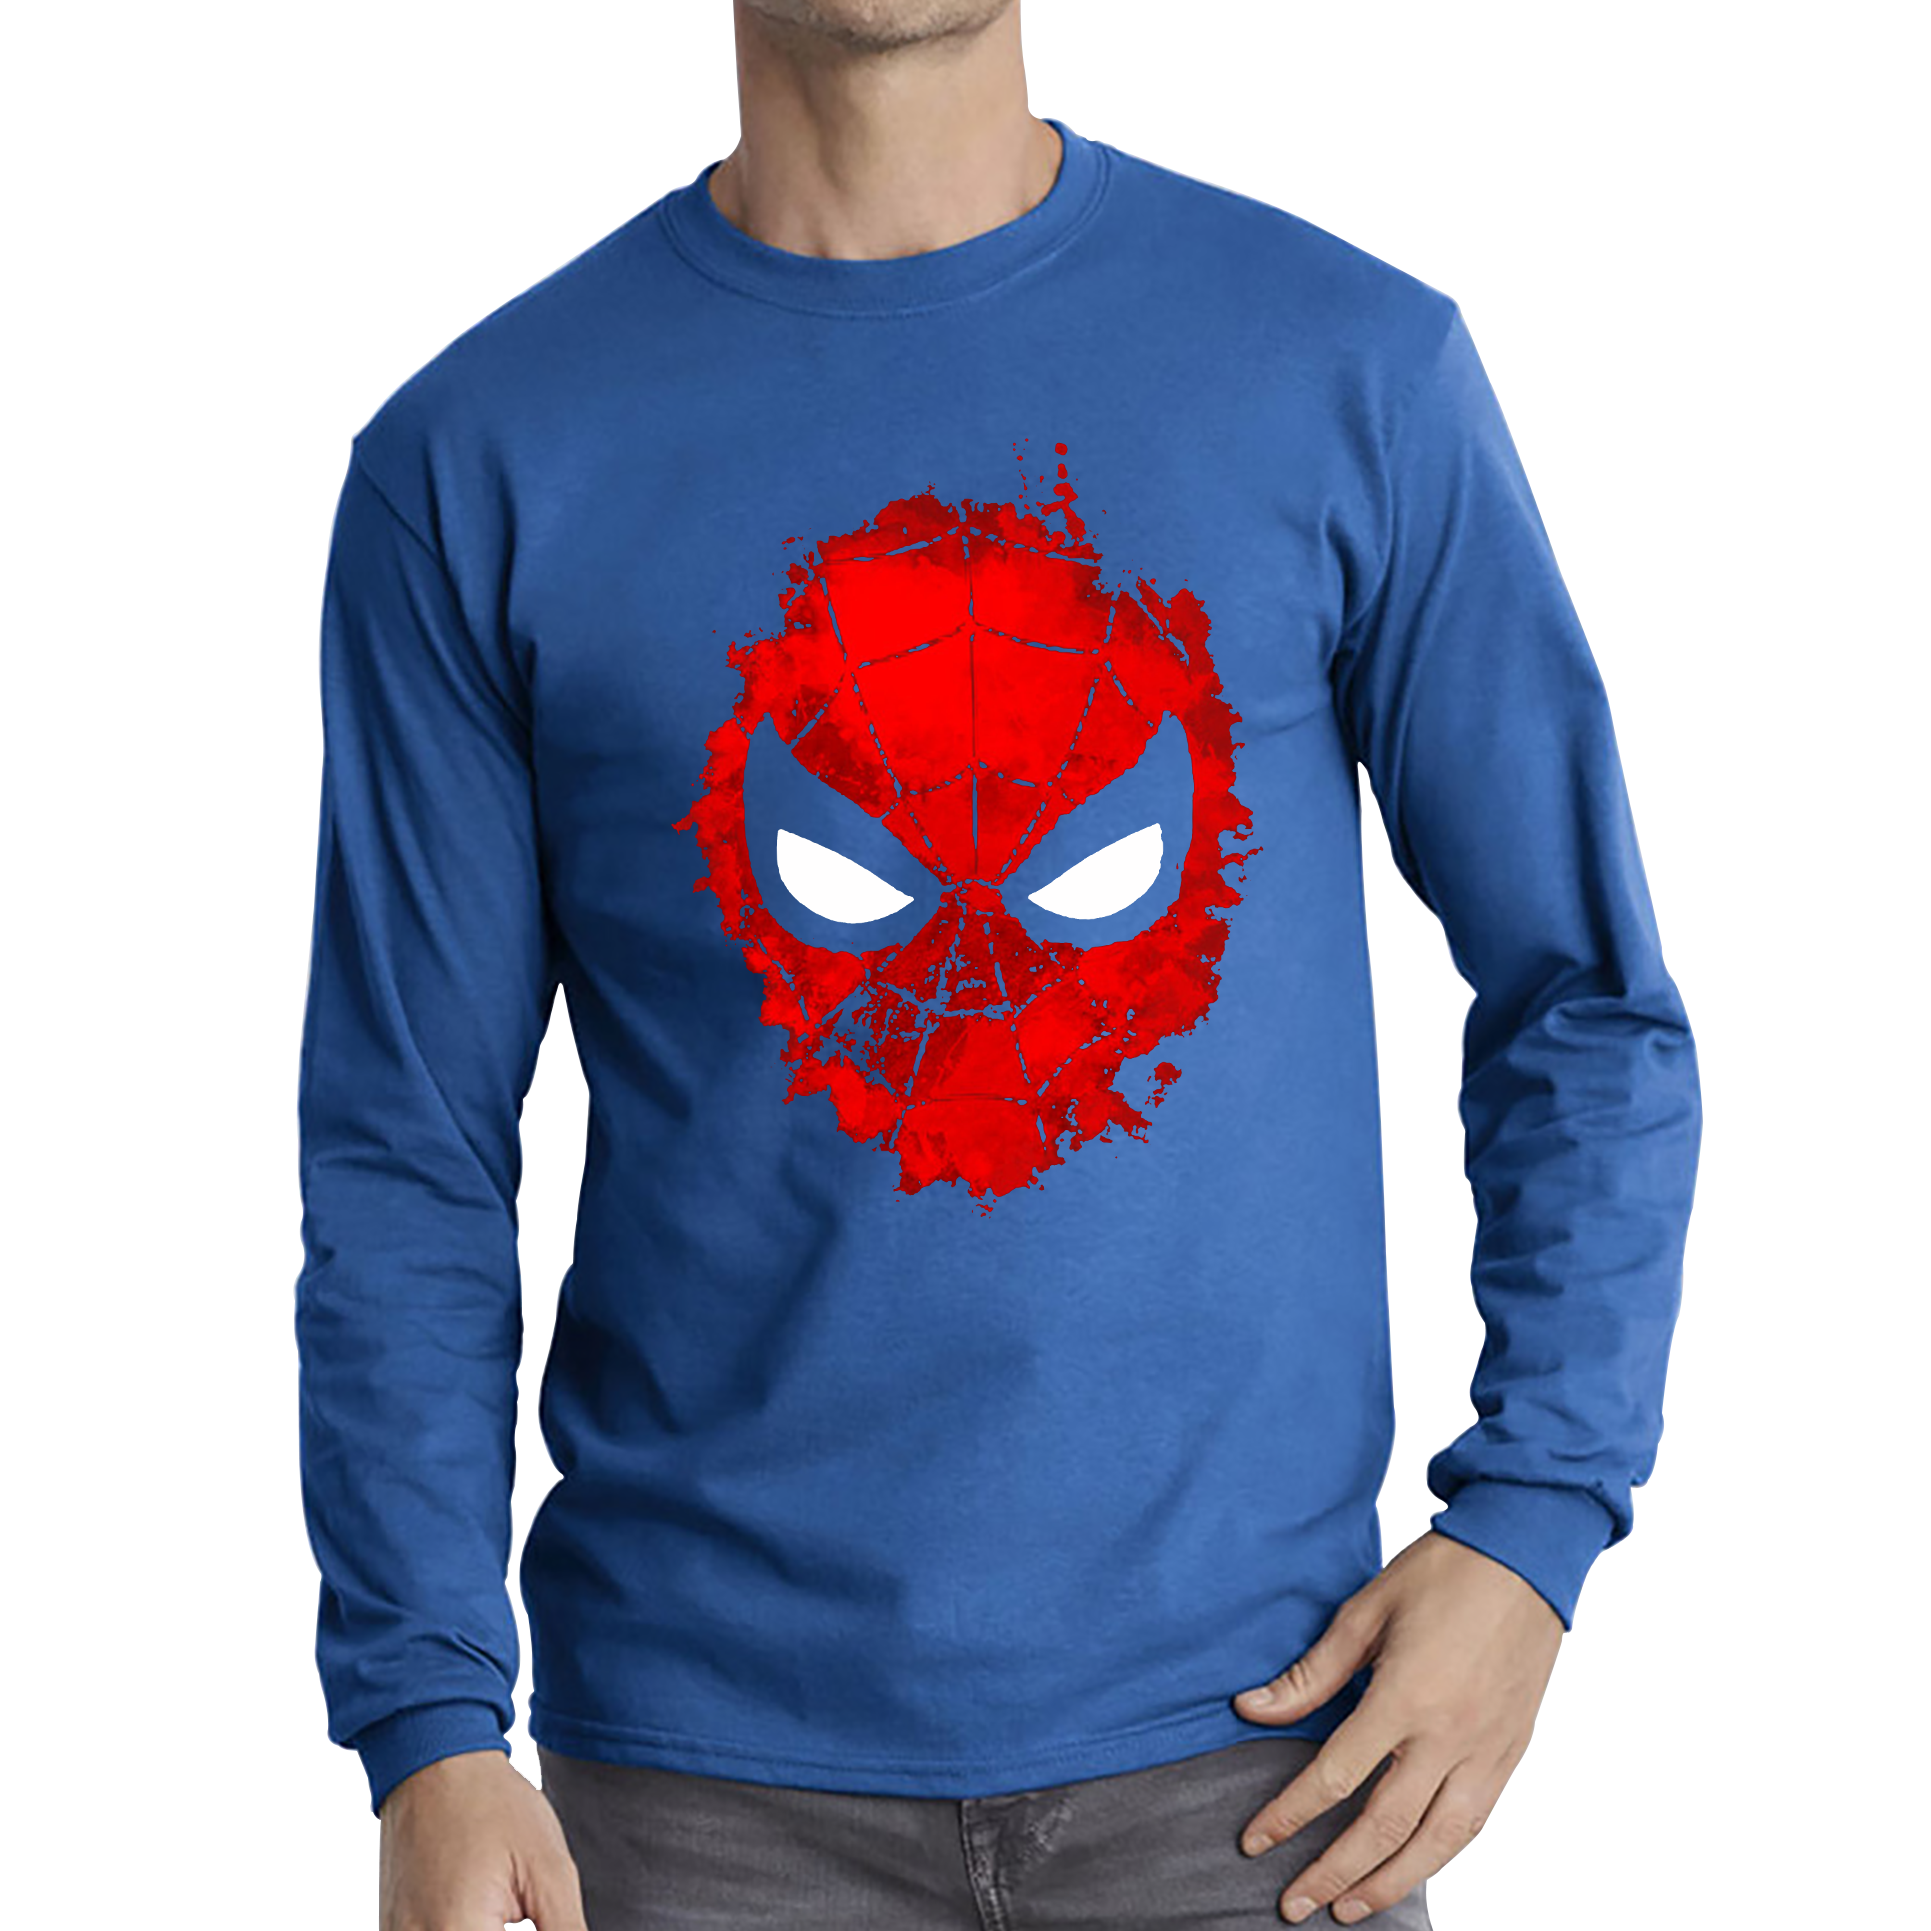 Marvel Comics Spiderman Face Adult Long Sleeve T Shirt